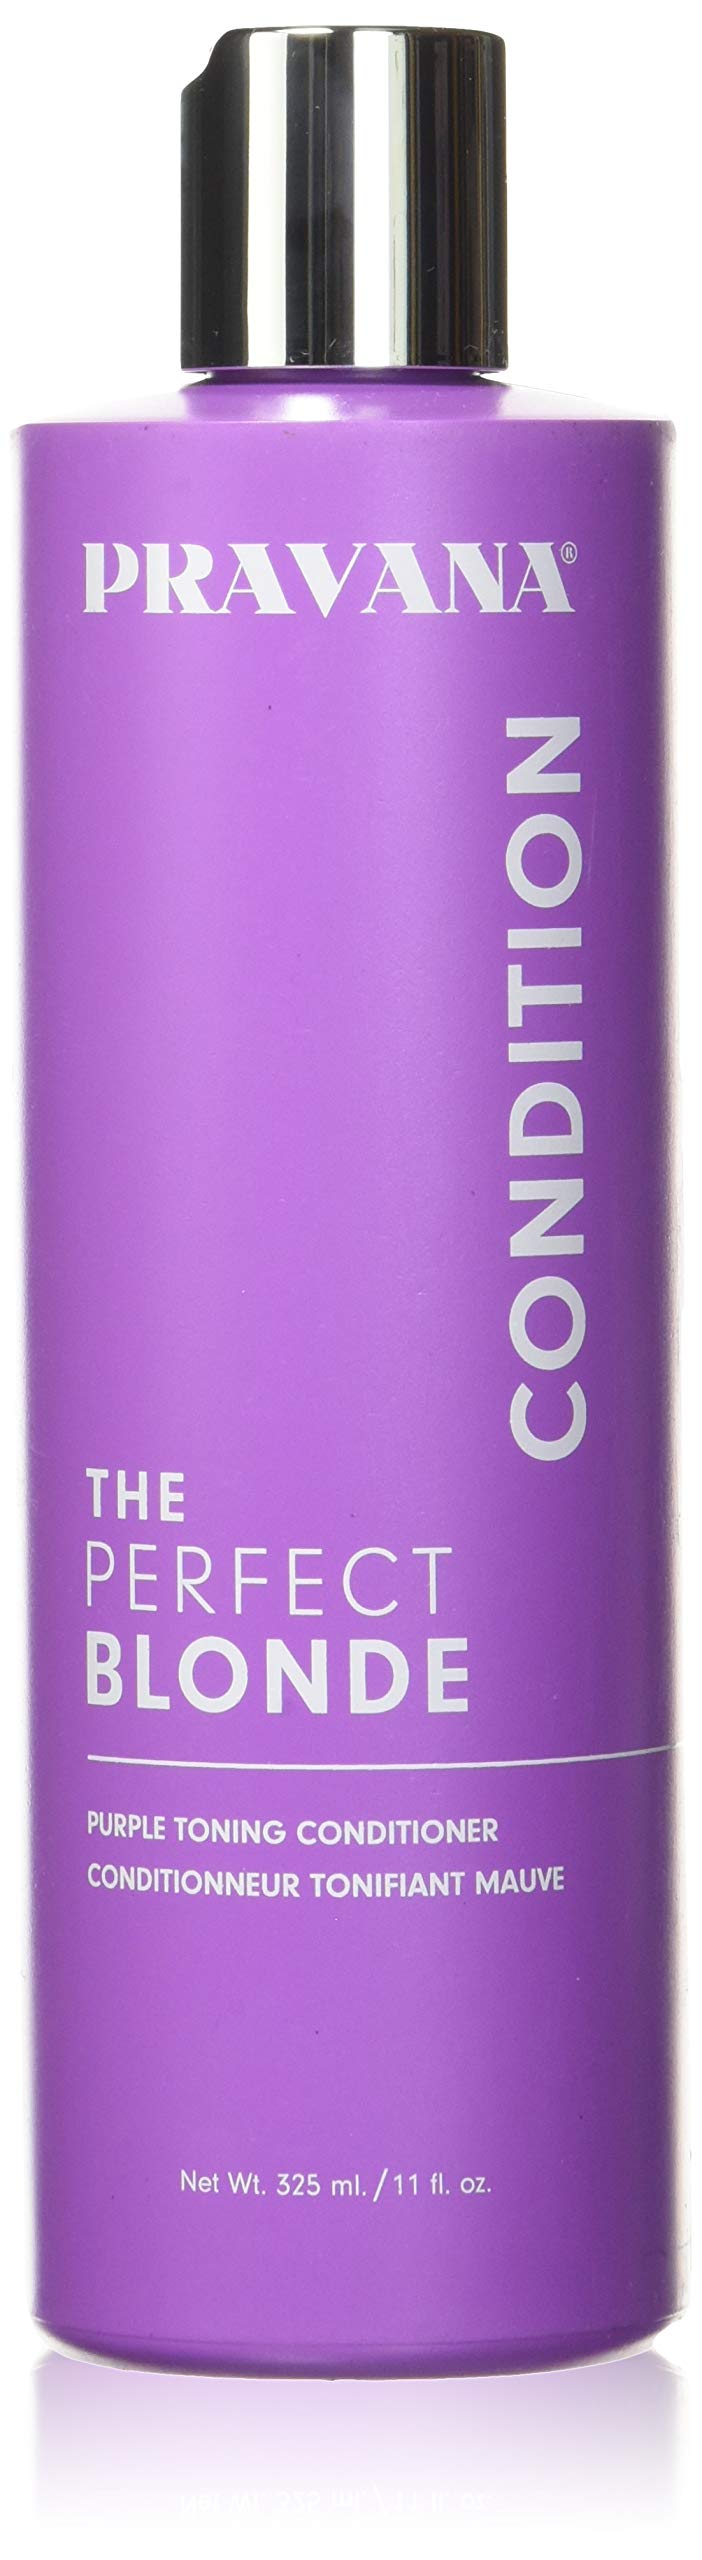 [Australia] - PRAVANA THE PERFECT BLONDE Purple Toning Conditioner 10.1 oz by Pravana 